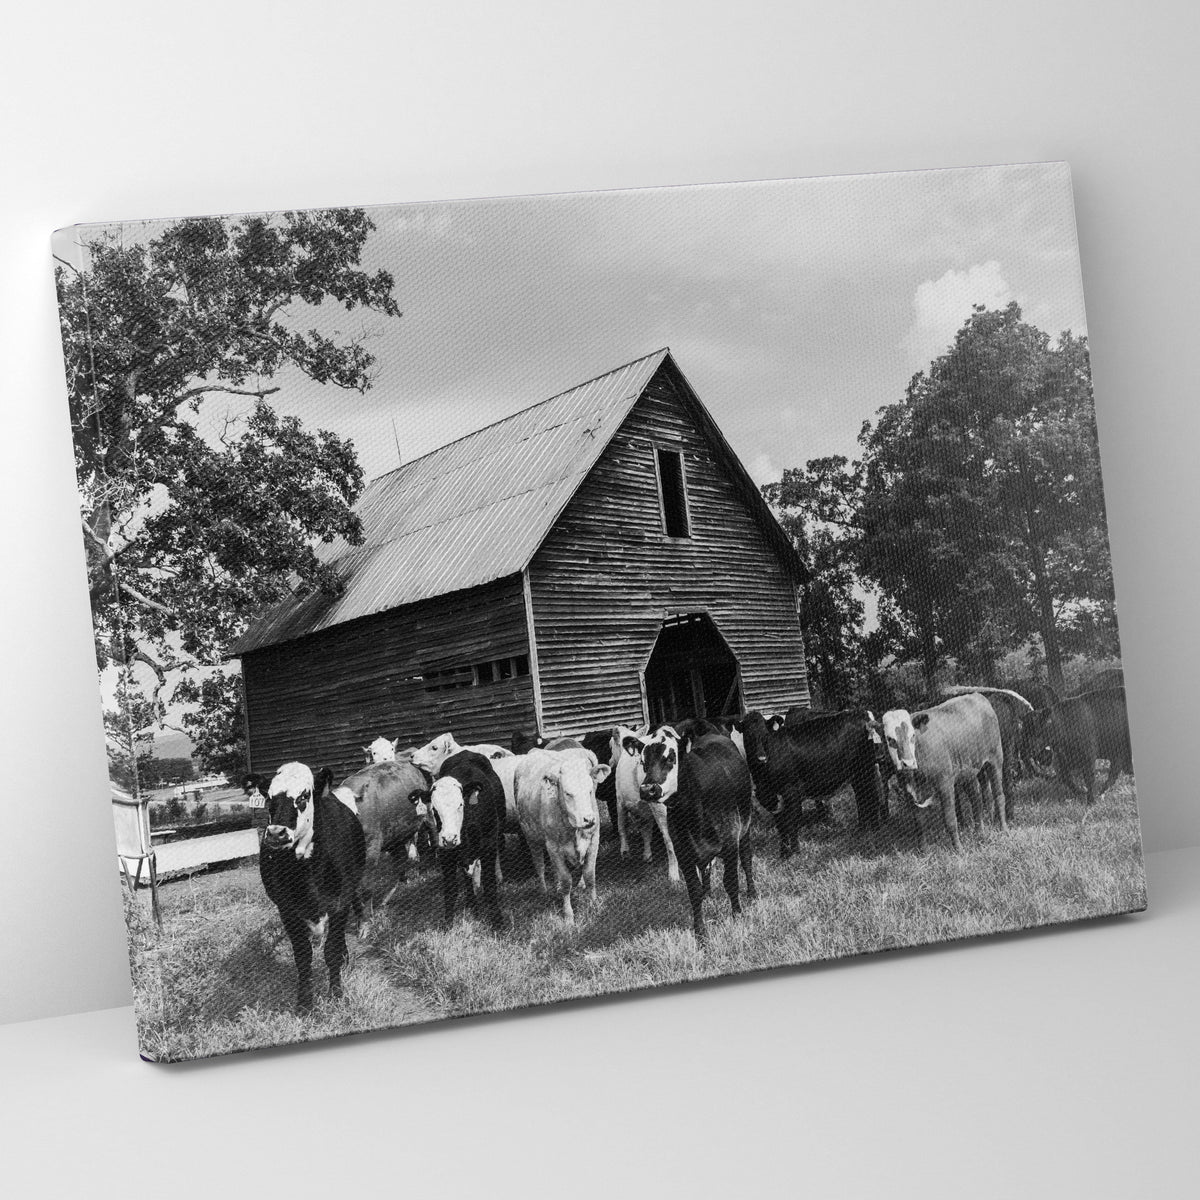 Cattle Barn Prints | Far Out Art 